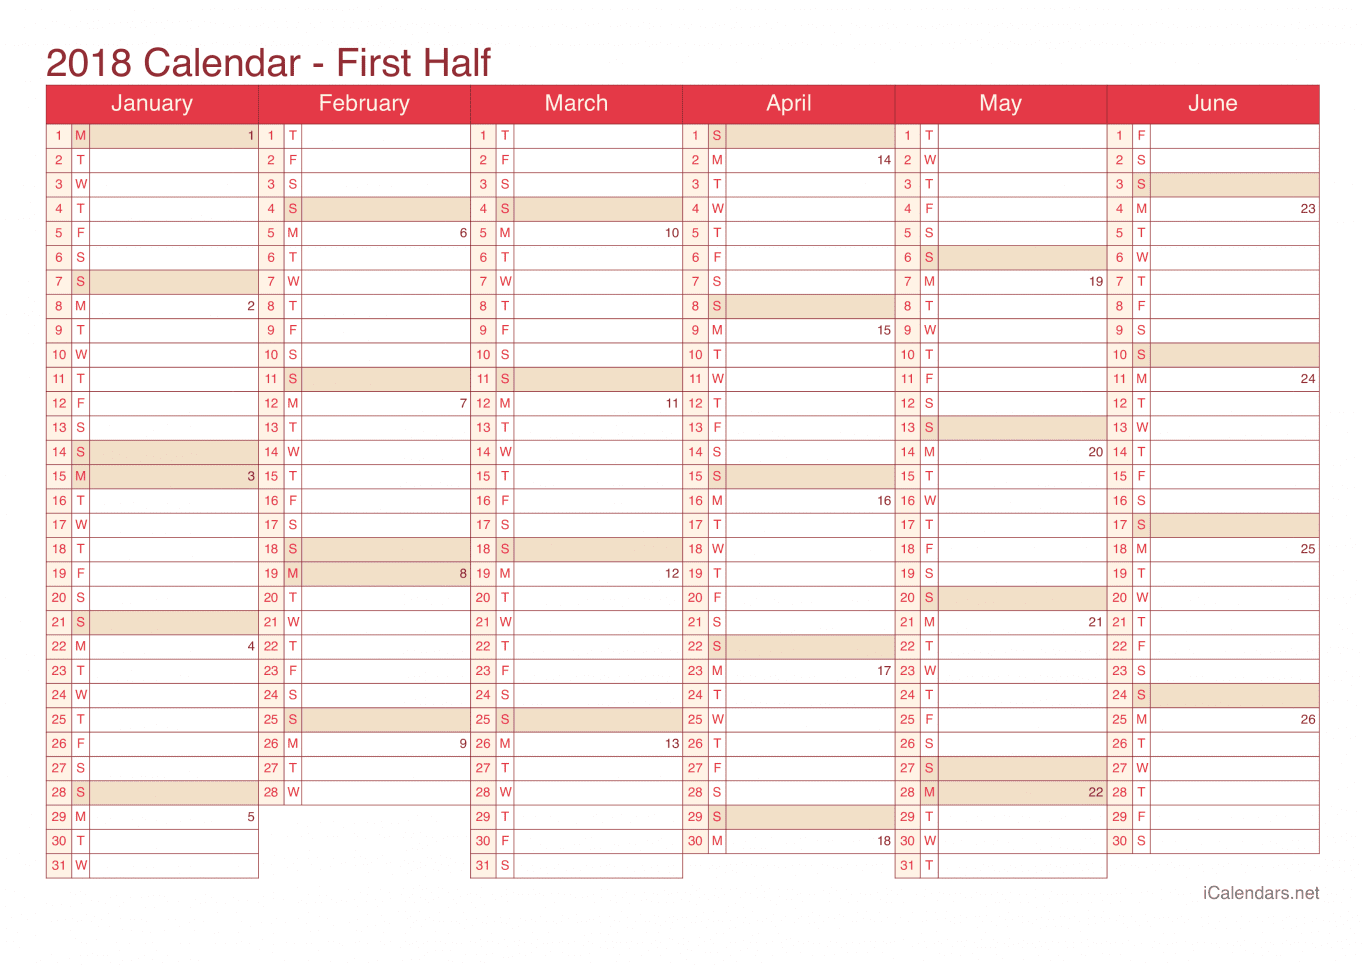 2018 Half year calendar with week numbers - Cherry